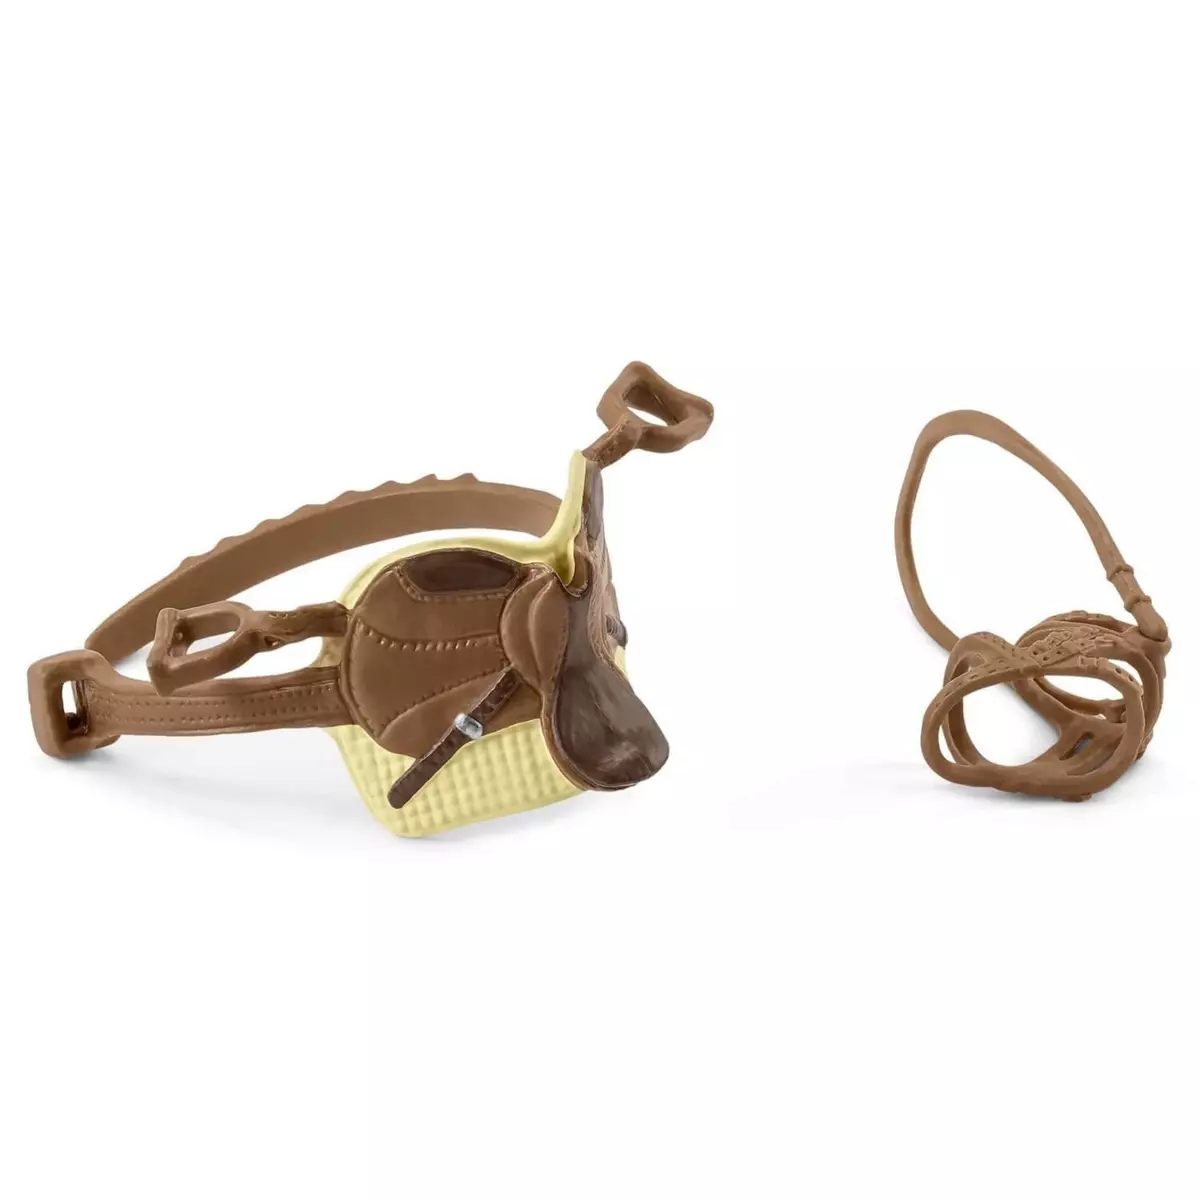 Schleich Set accessoires pour figurines cheval : Selle & bride Horse Club Sarah & Mystery